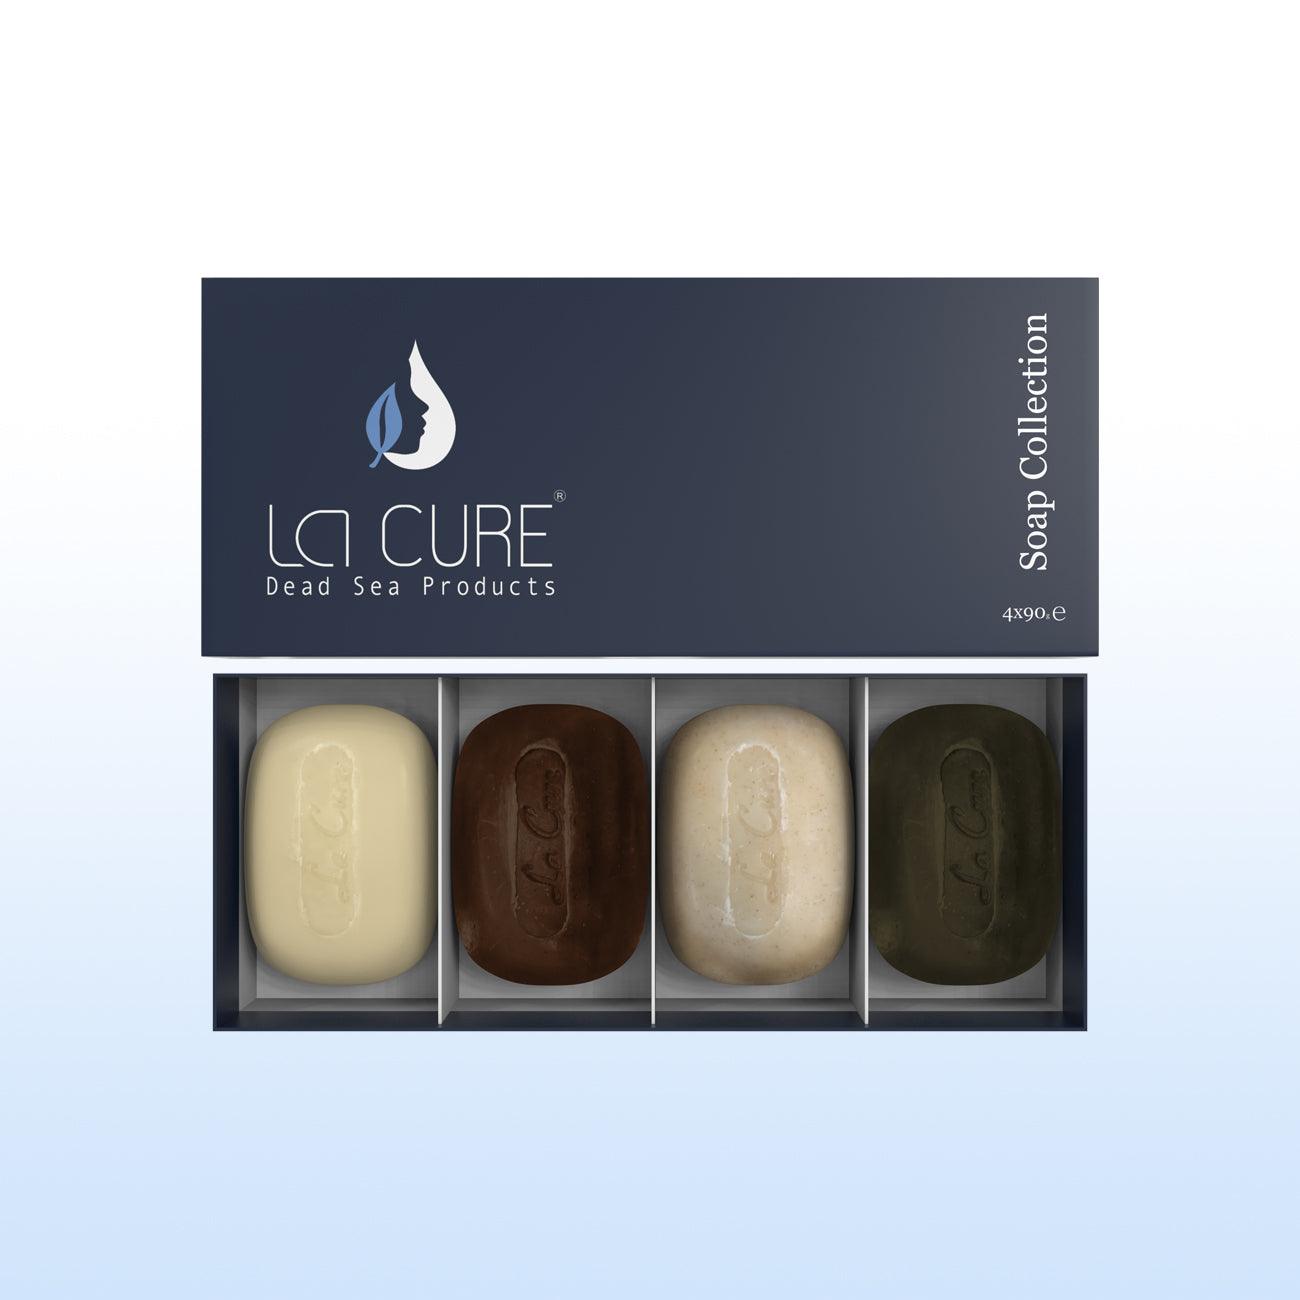 La Cure Soaps Collection (Mud Soap, Salt Soap, Scrub Soap, Black-Seed Soap) 4*90g - Mrayti Store